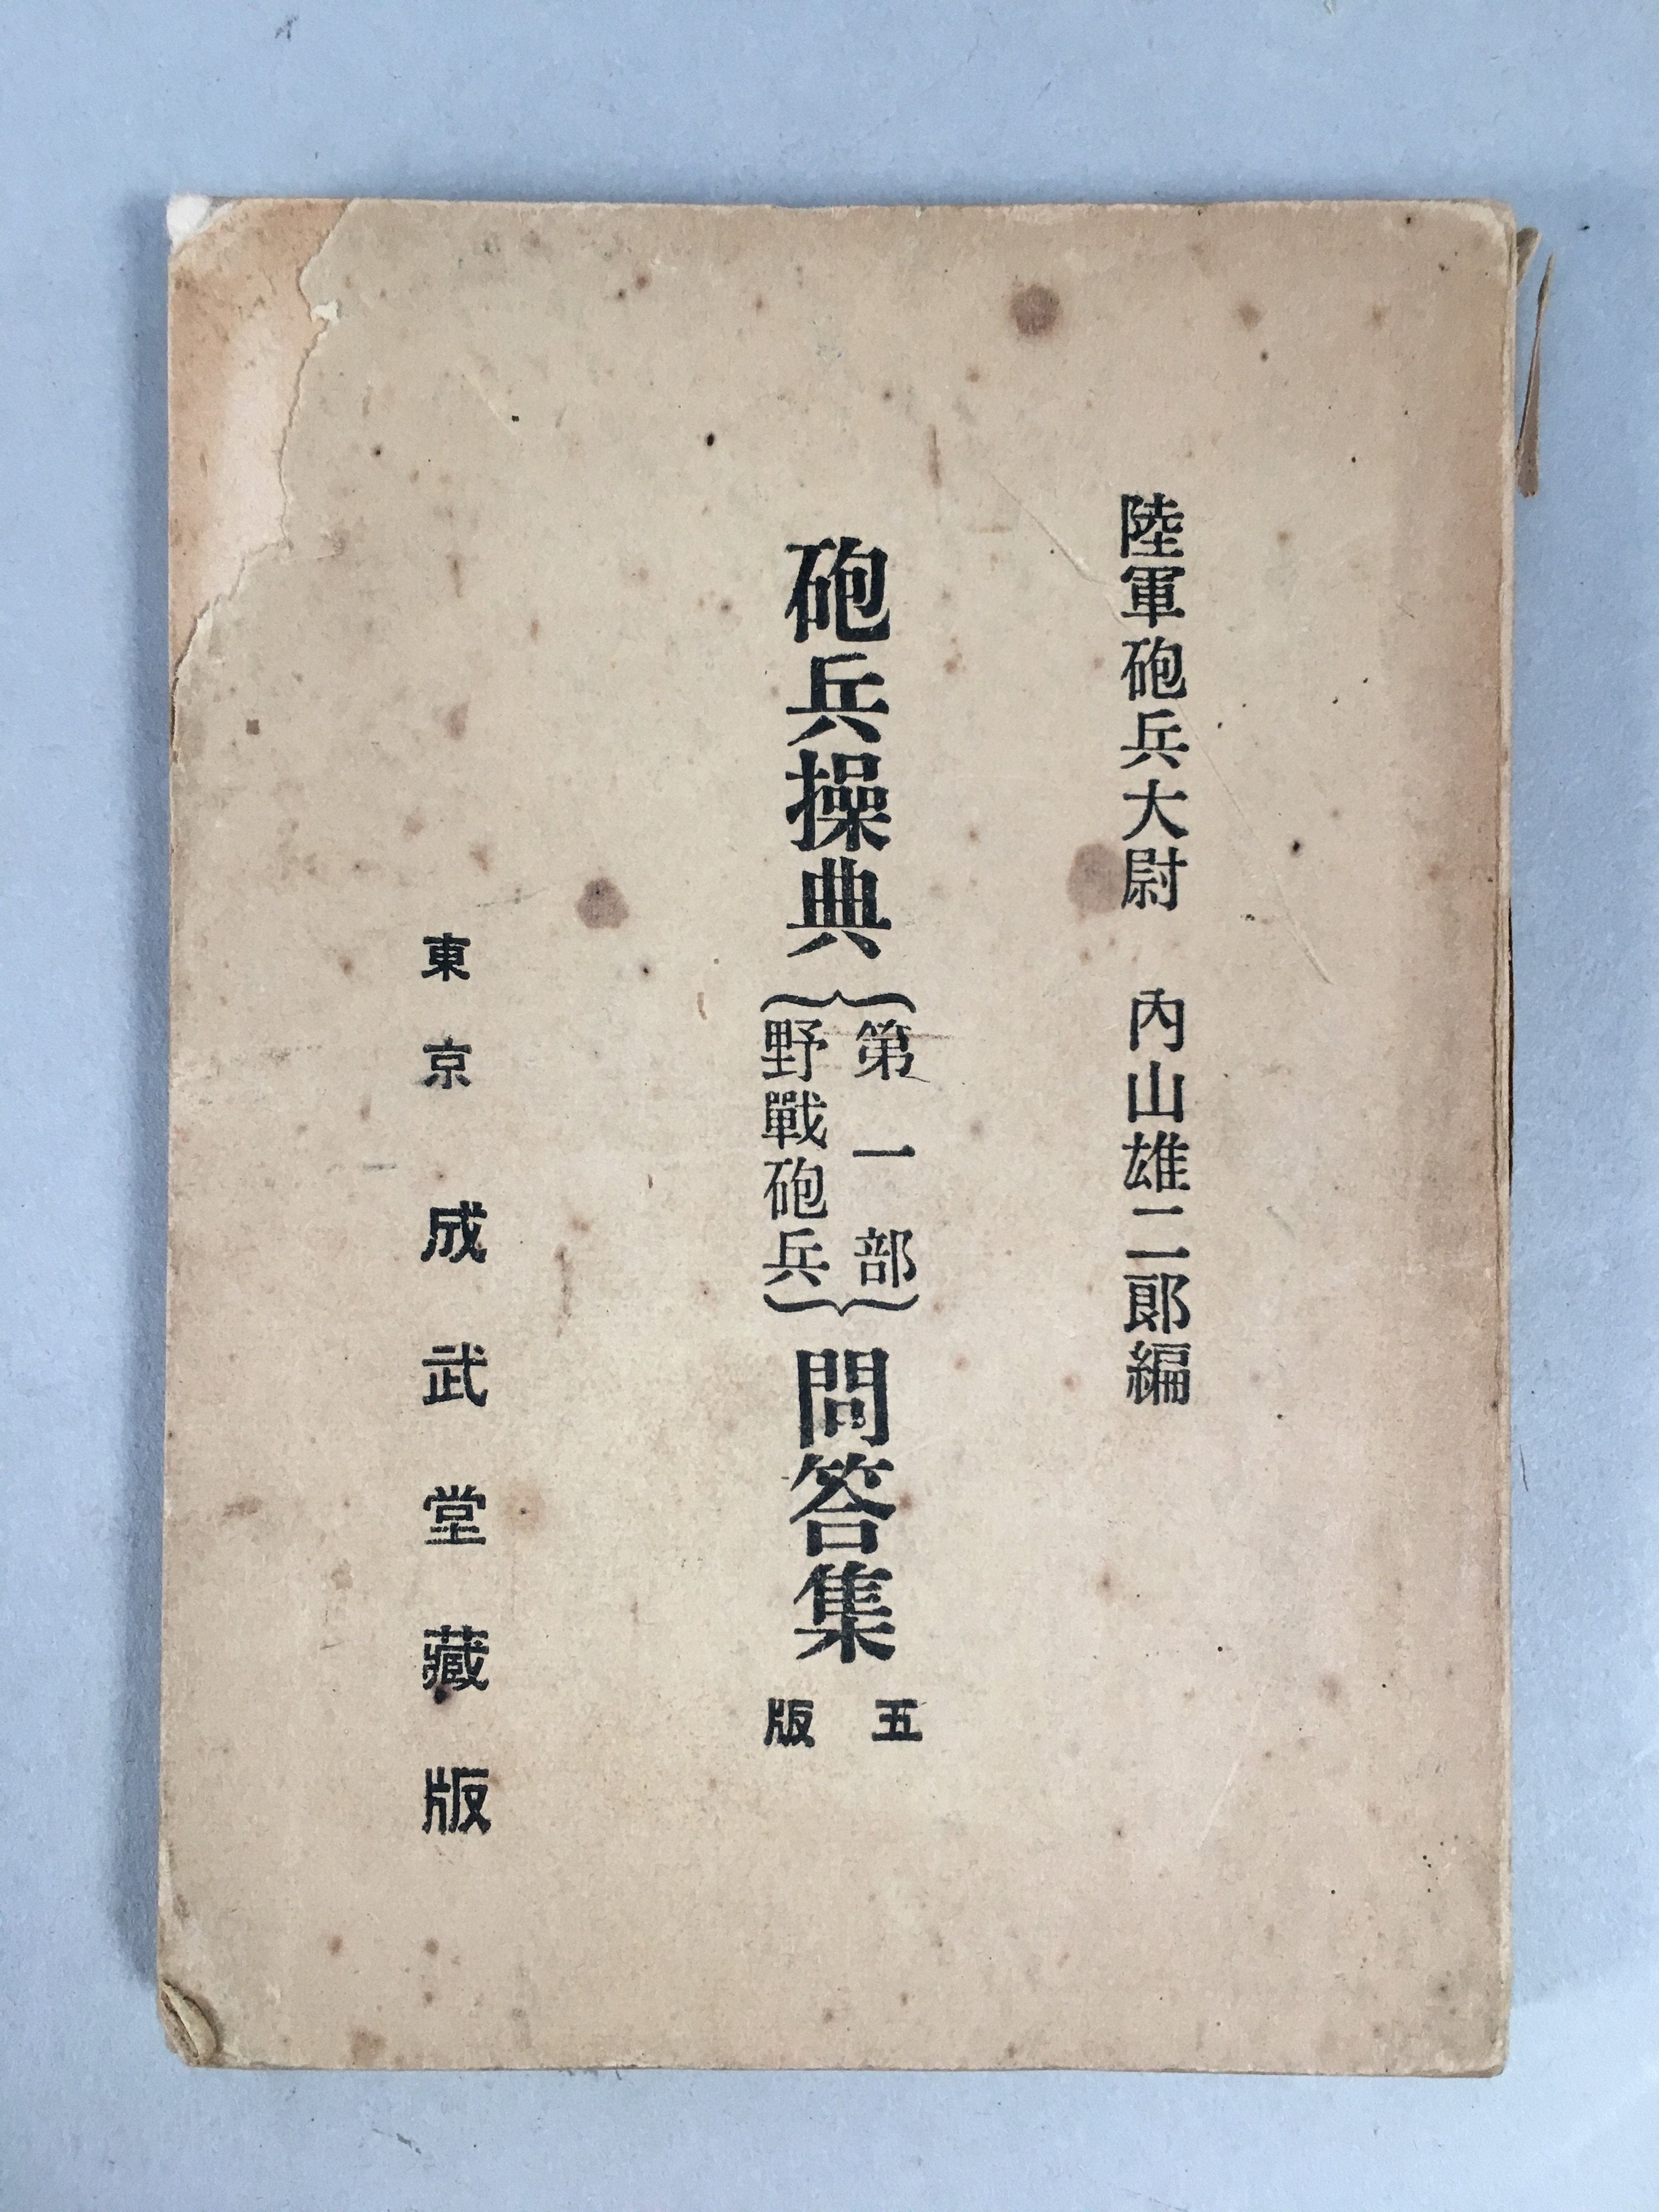 Japanese Military Book Vtg Army Artillery Manual 1929 JK140